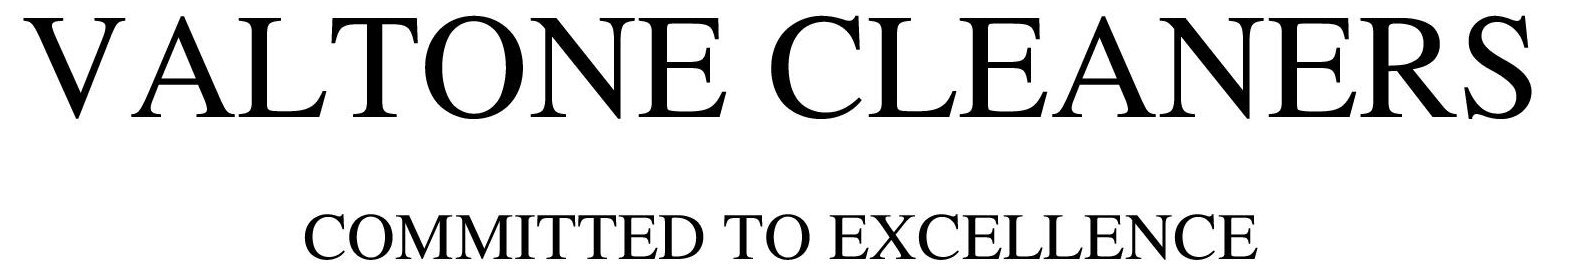 Valtone Cleaners Logo[1].jpg